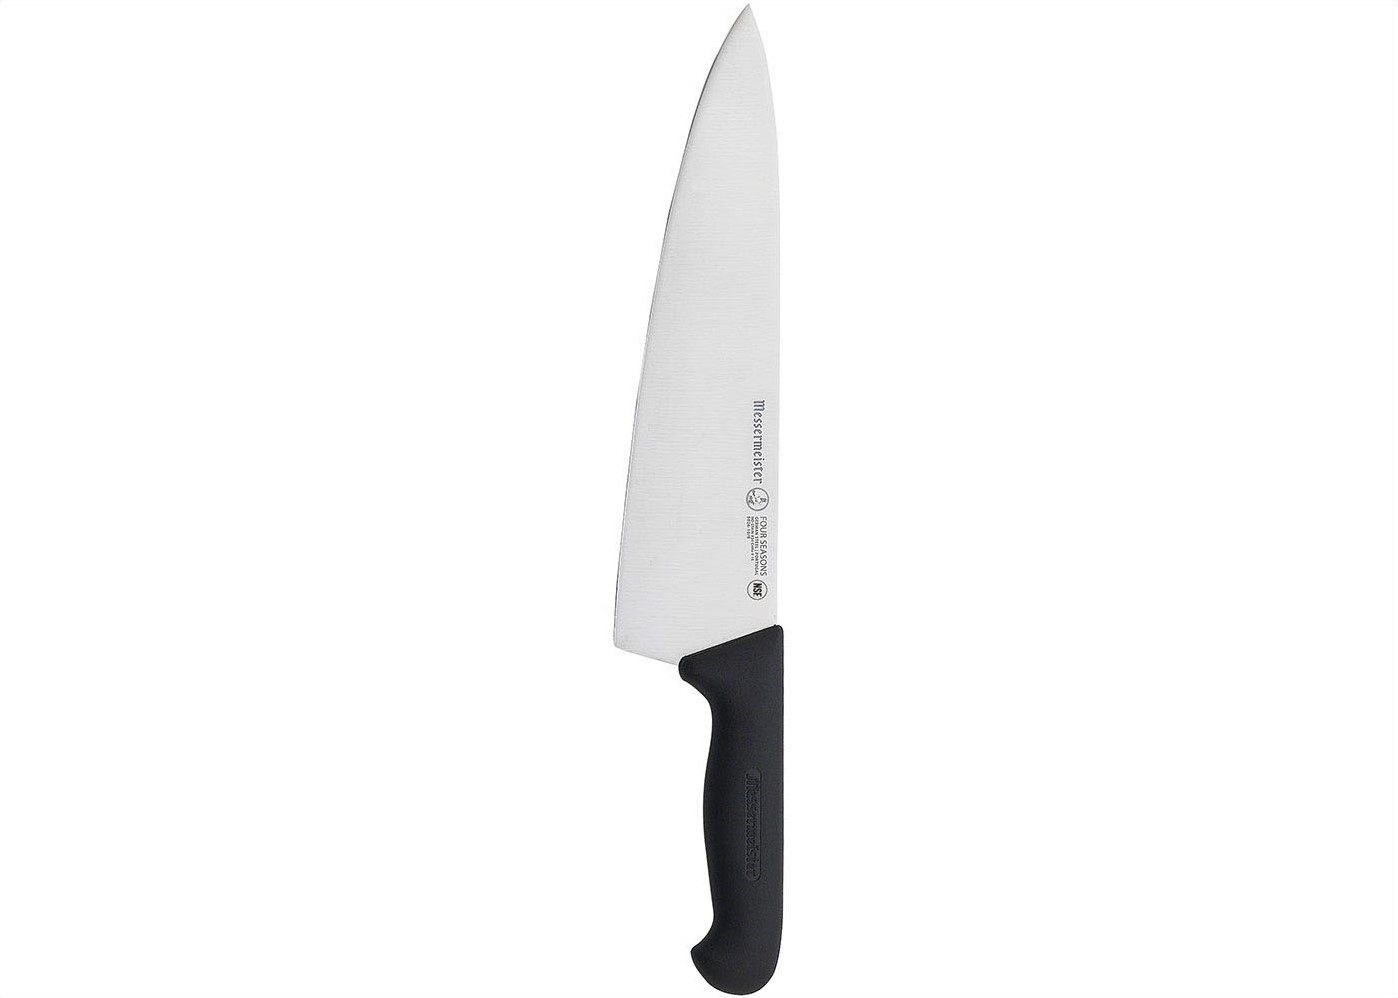 https://www.messermeister-europe.com/resize/5026-10_11320013209138.jpg/0/1100/True/four-seasons-wide-blade-chef-apos-s-knife-10-inch.jpg